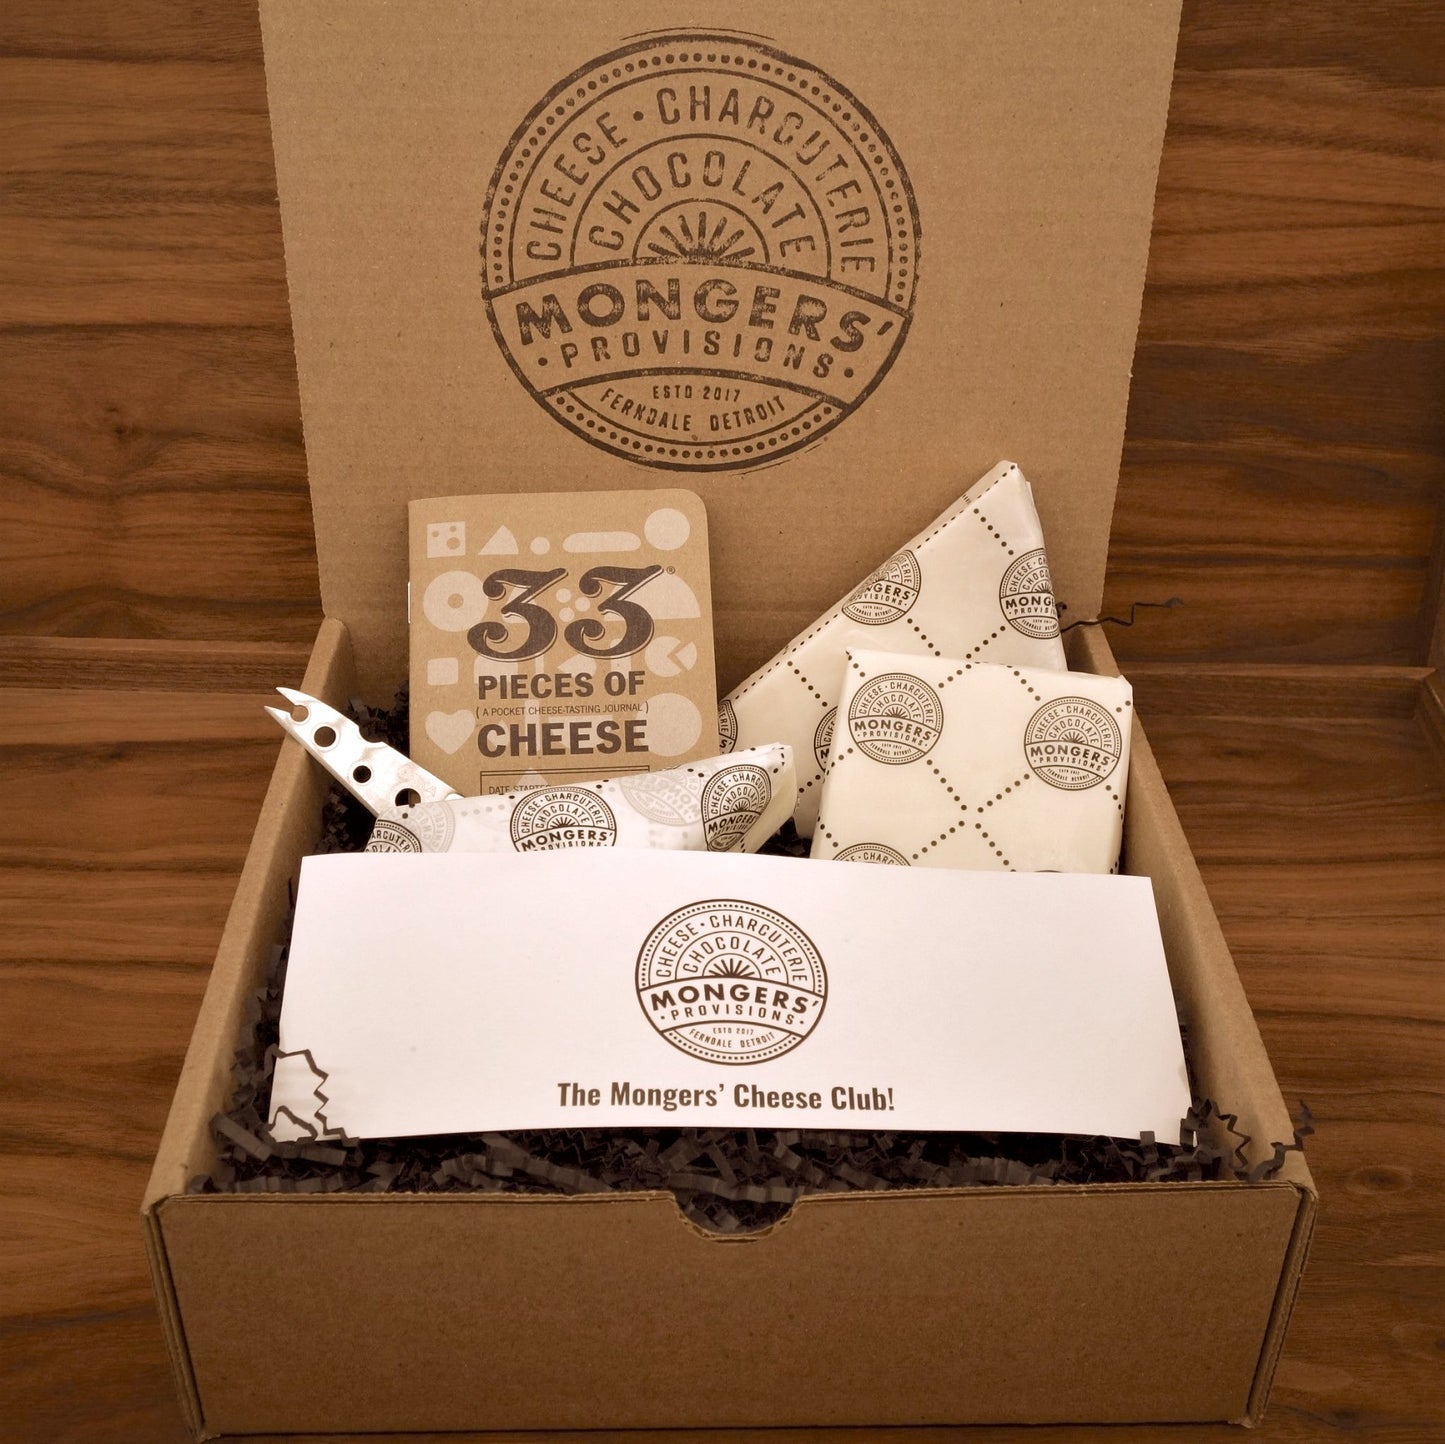 The Mongers' Cheese Club Box